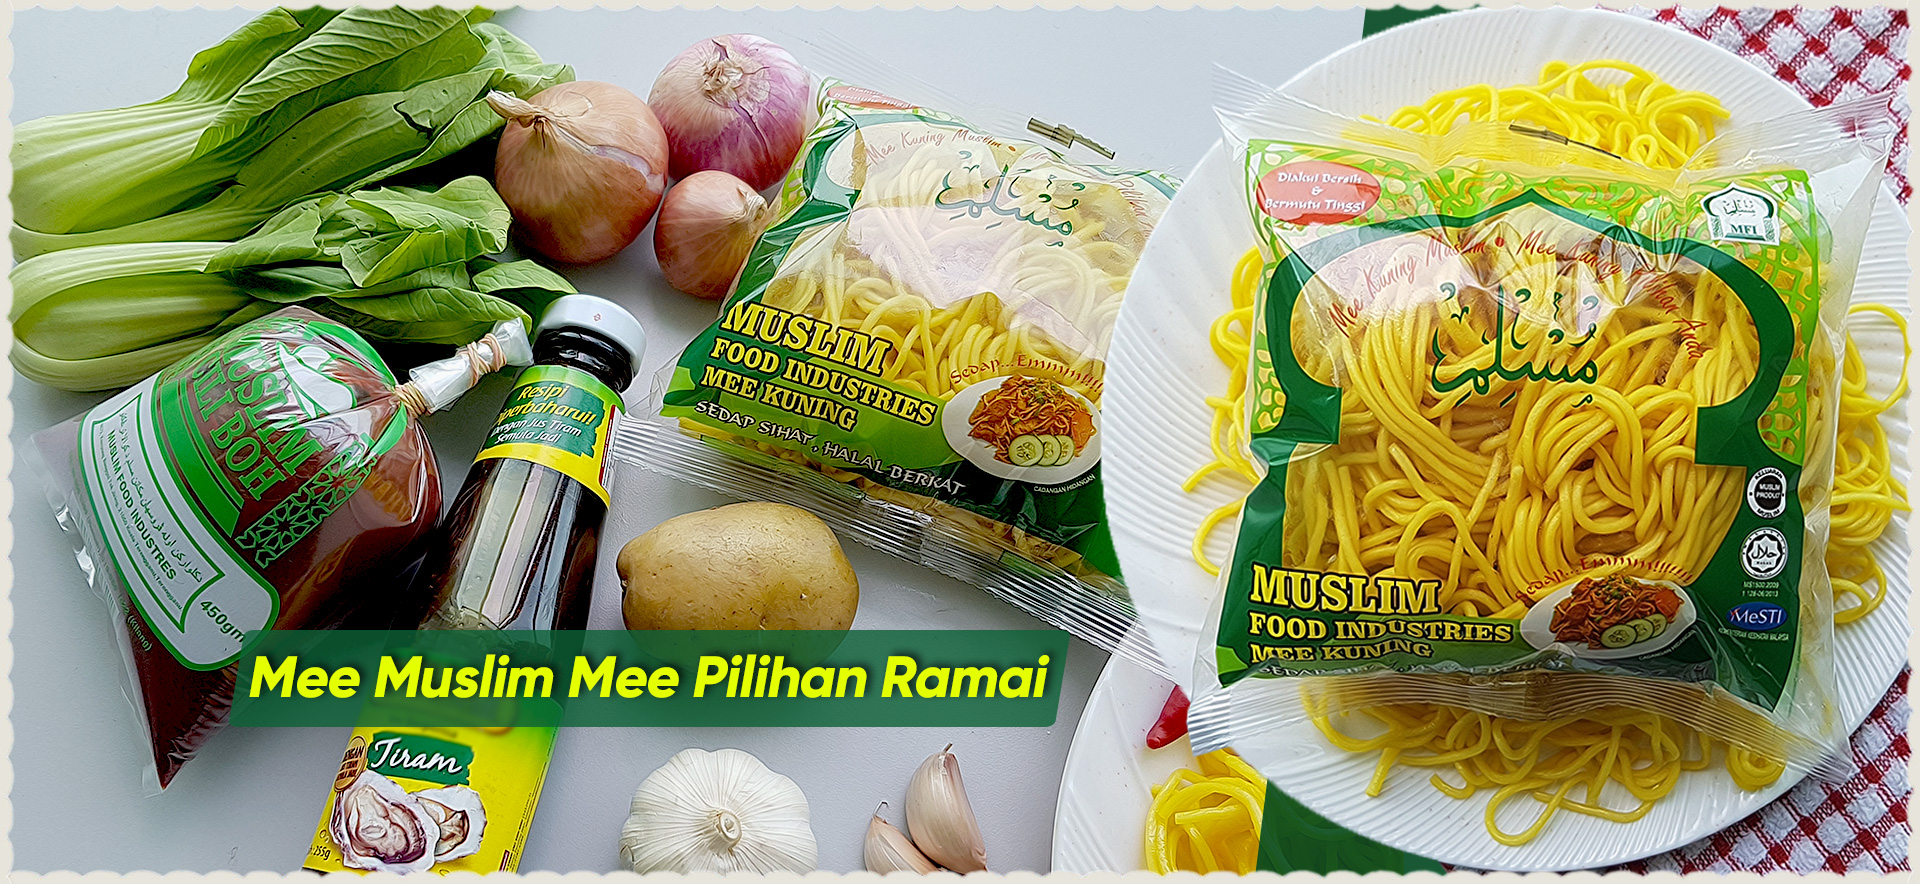 Mee_Kuning_Teow_Kuey_Kway_Muslim_Halal_Cili_Boh_Laksa_Terengganu_Beras_Sedap_Rojak_Muslim_Food_Industries_04